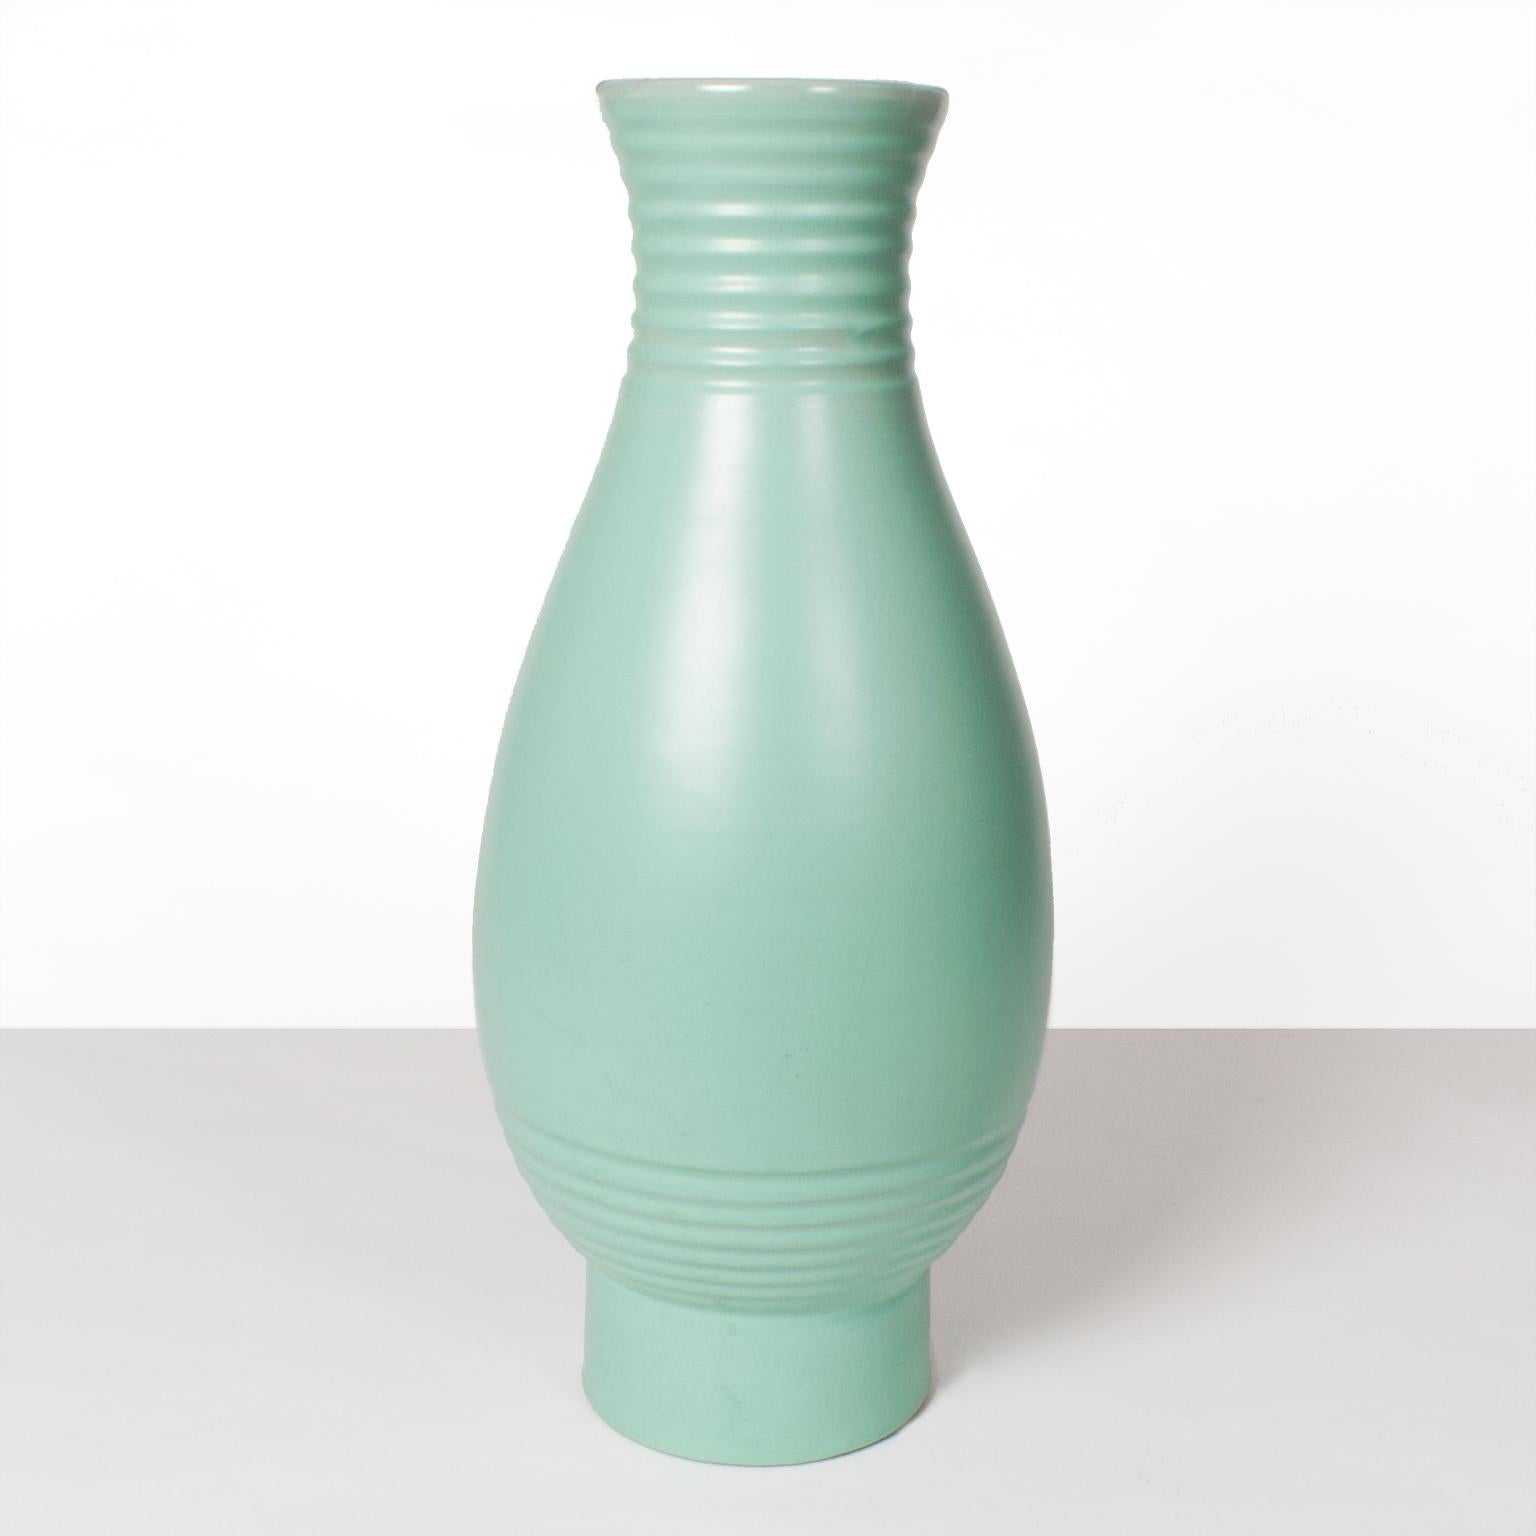 Scandinavian Modern, Swedish art deco vase by artist Ewald Dahlskog in a soft green glaze produced at Bo Fajans.
 
Dimensions: 19